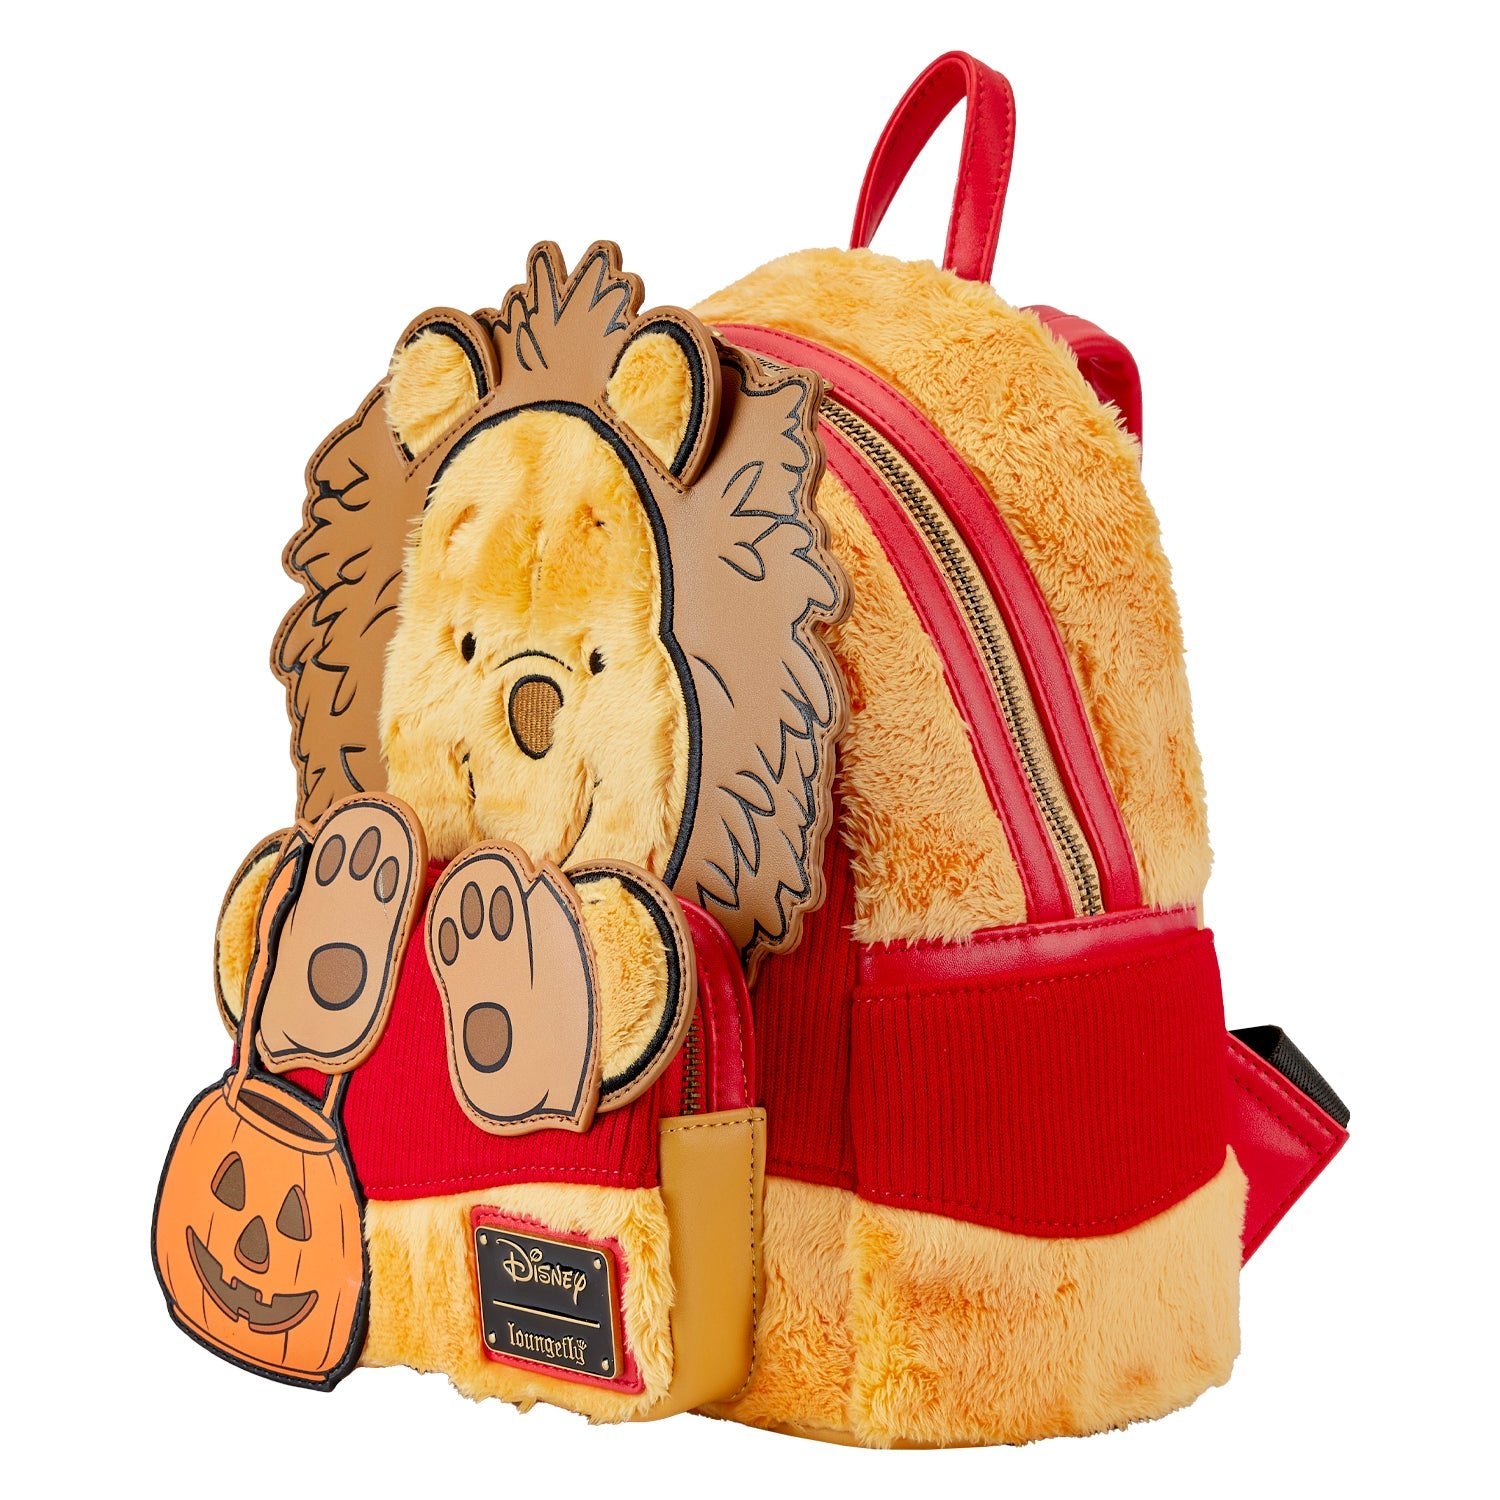 Loungefly x Disney Winnie the Pooh Halloween Costume Cosplay Mini Backpack - GeekCore